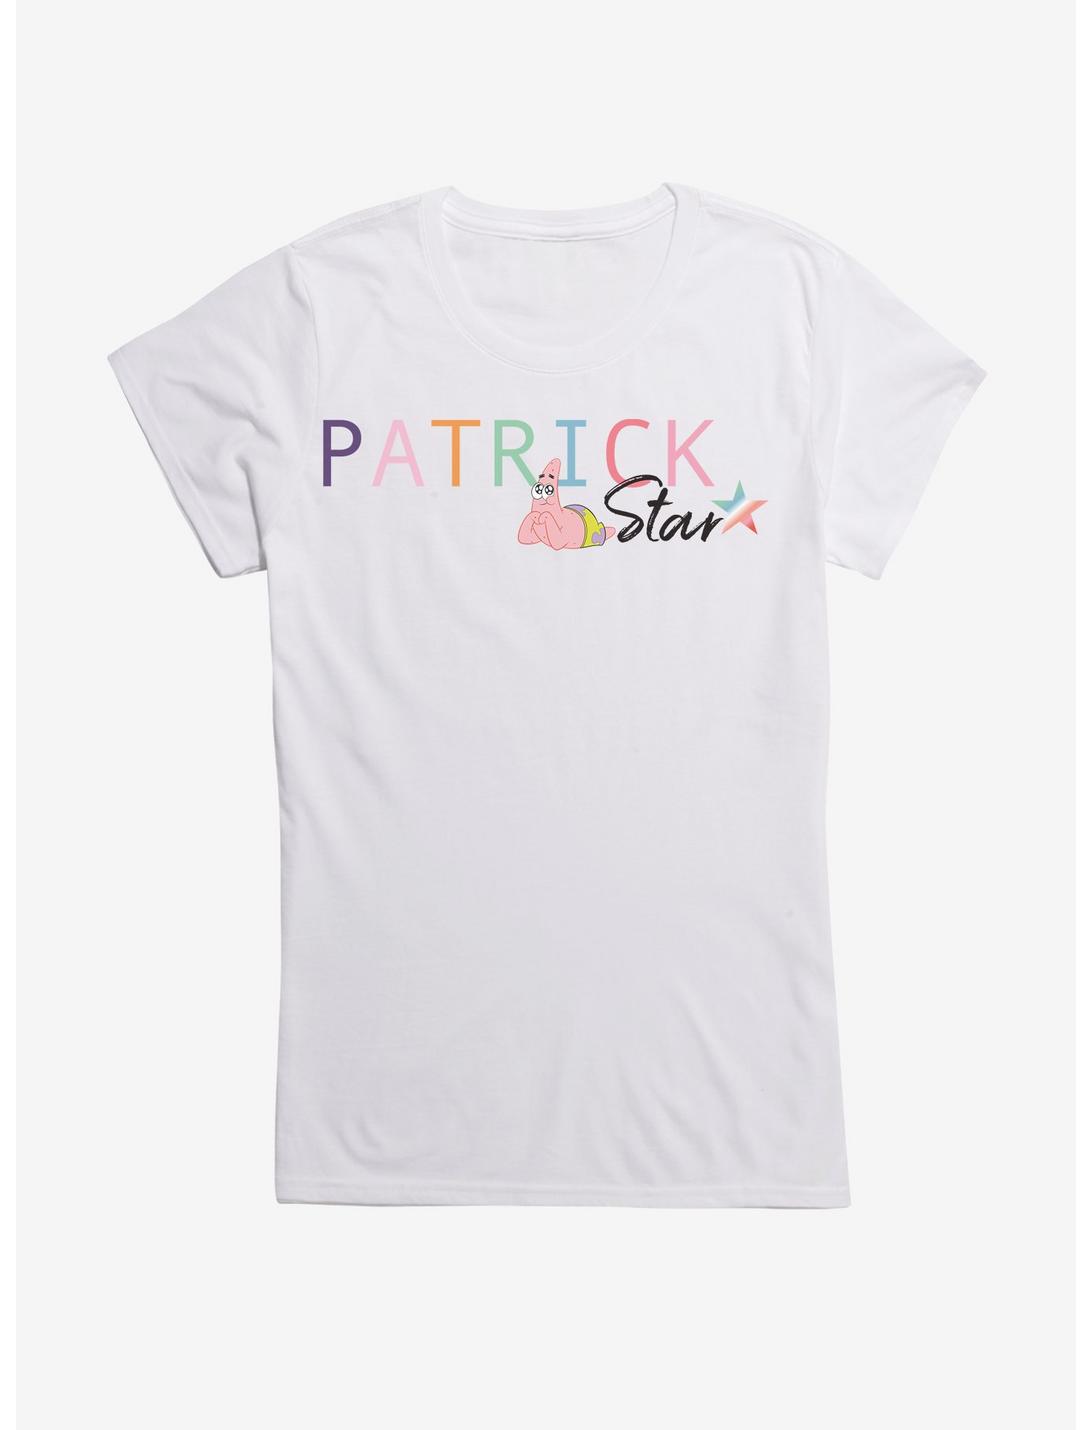 Spongebob Squarepants Patrick Star Girls T-Shirt, , hi-res